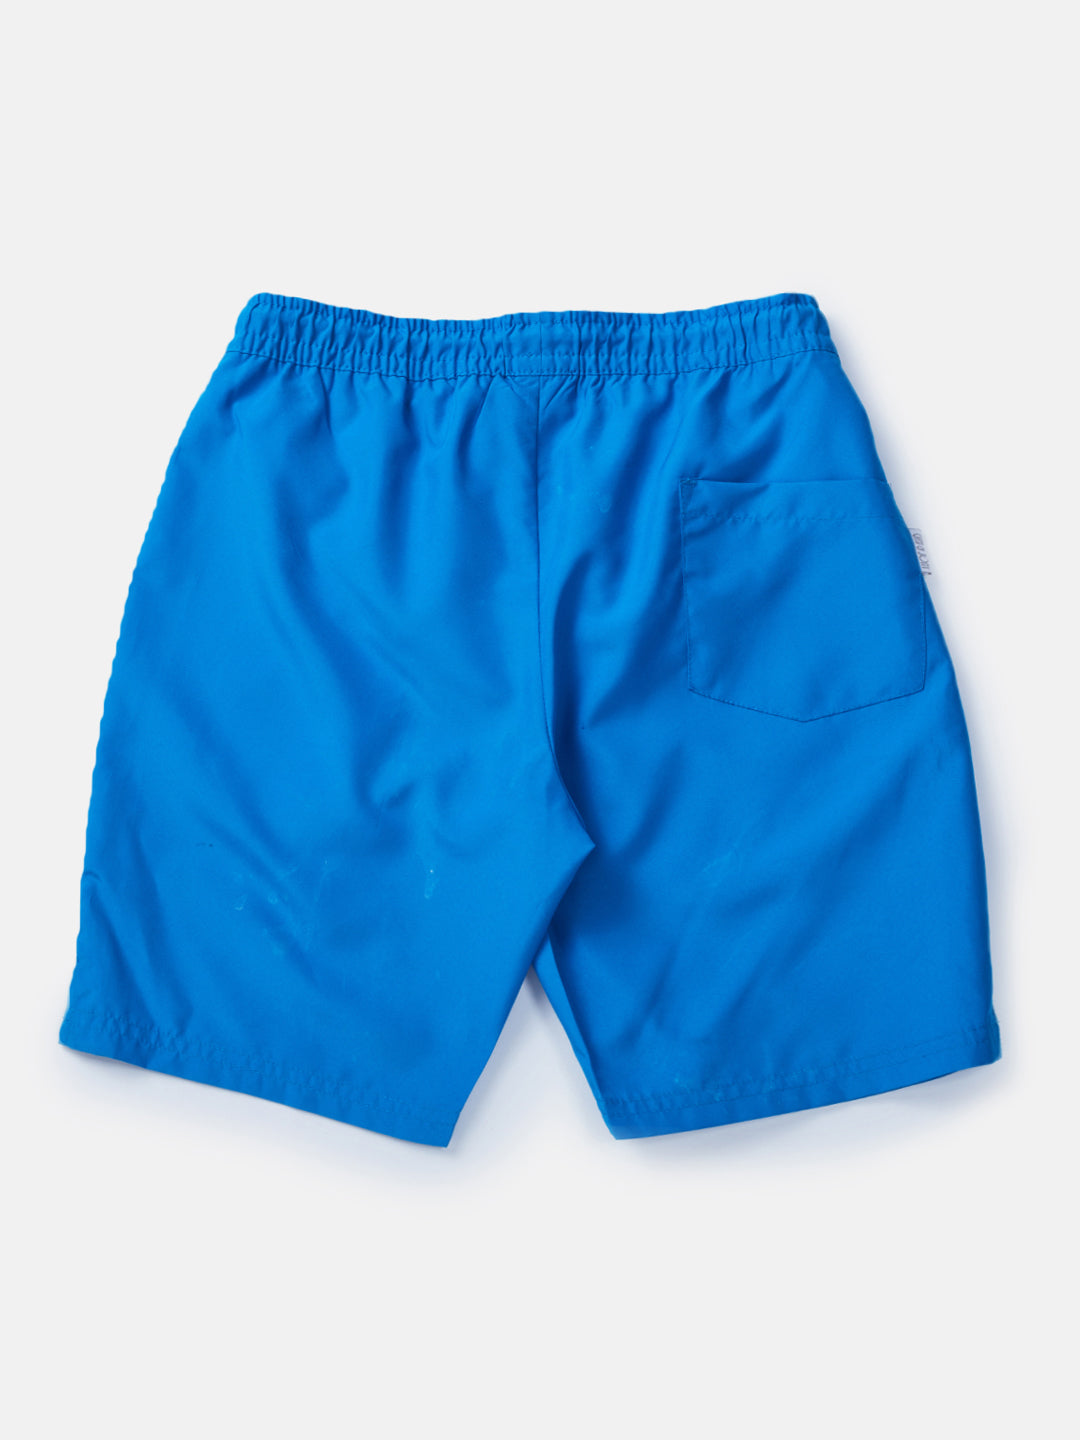 Boys Blue Knits Solid Elasticated Shorts